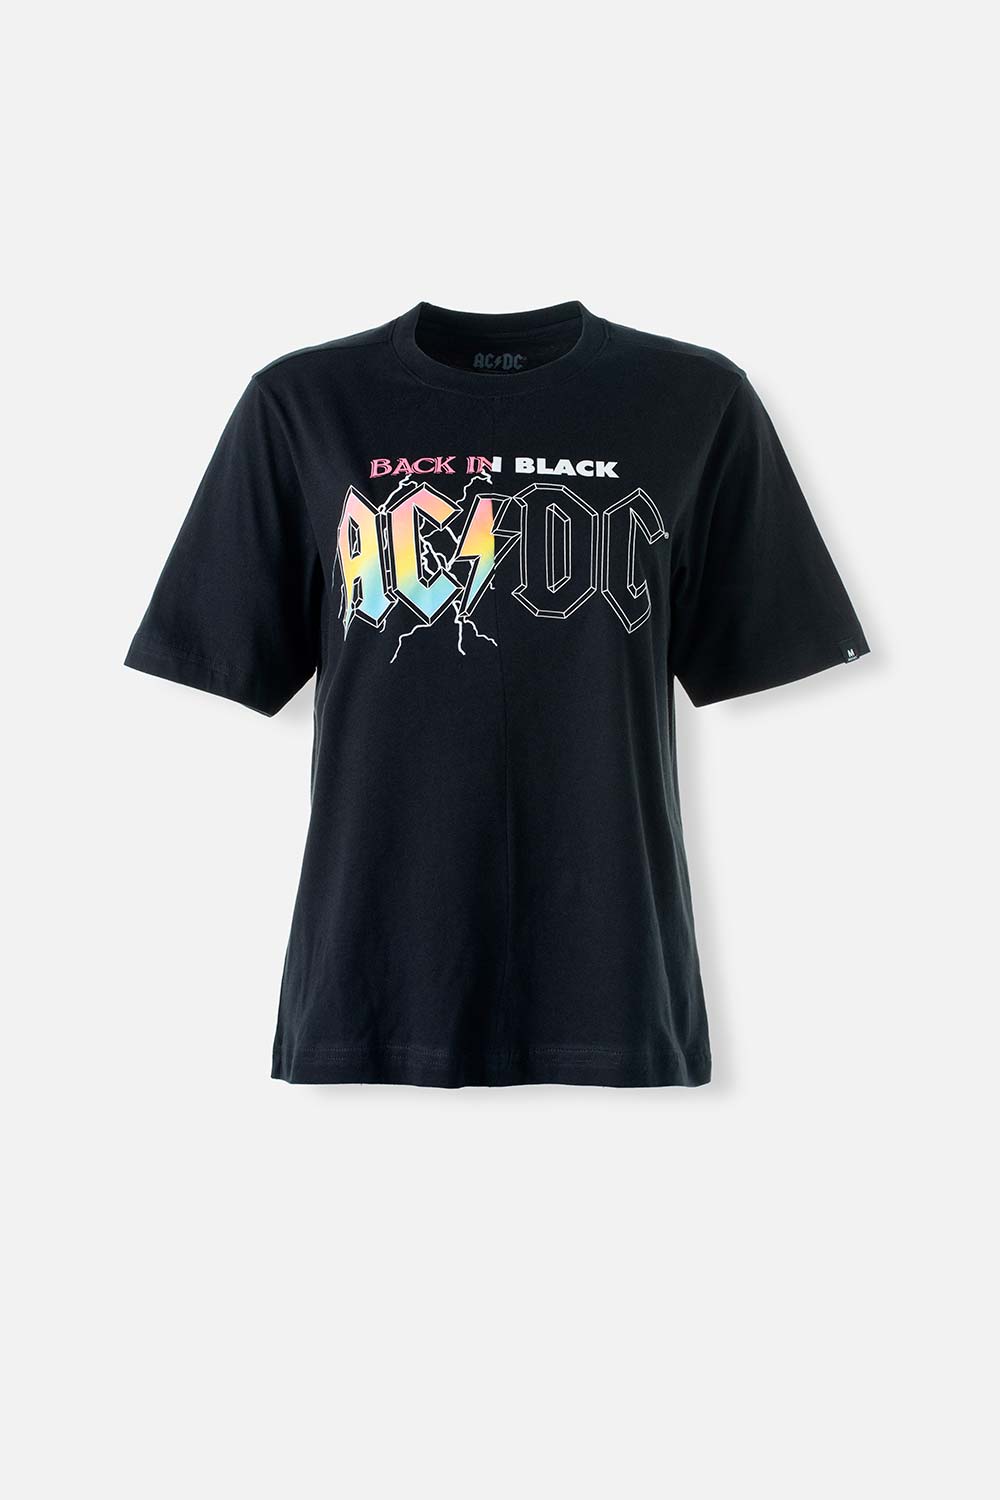 Camiseta de AC/DC negra manga corta para mujer L-0